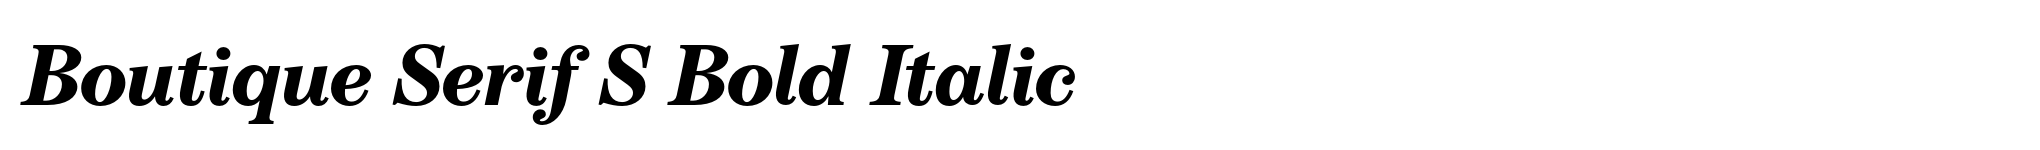 Boutique Serif S Bold Italic image